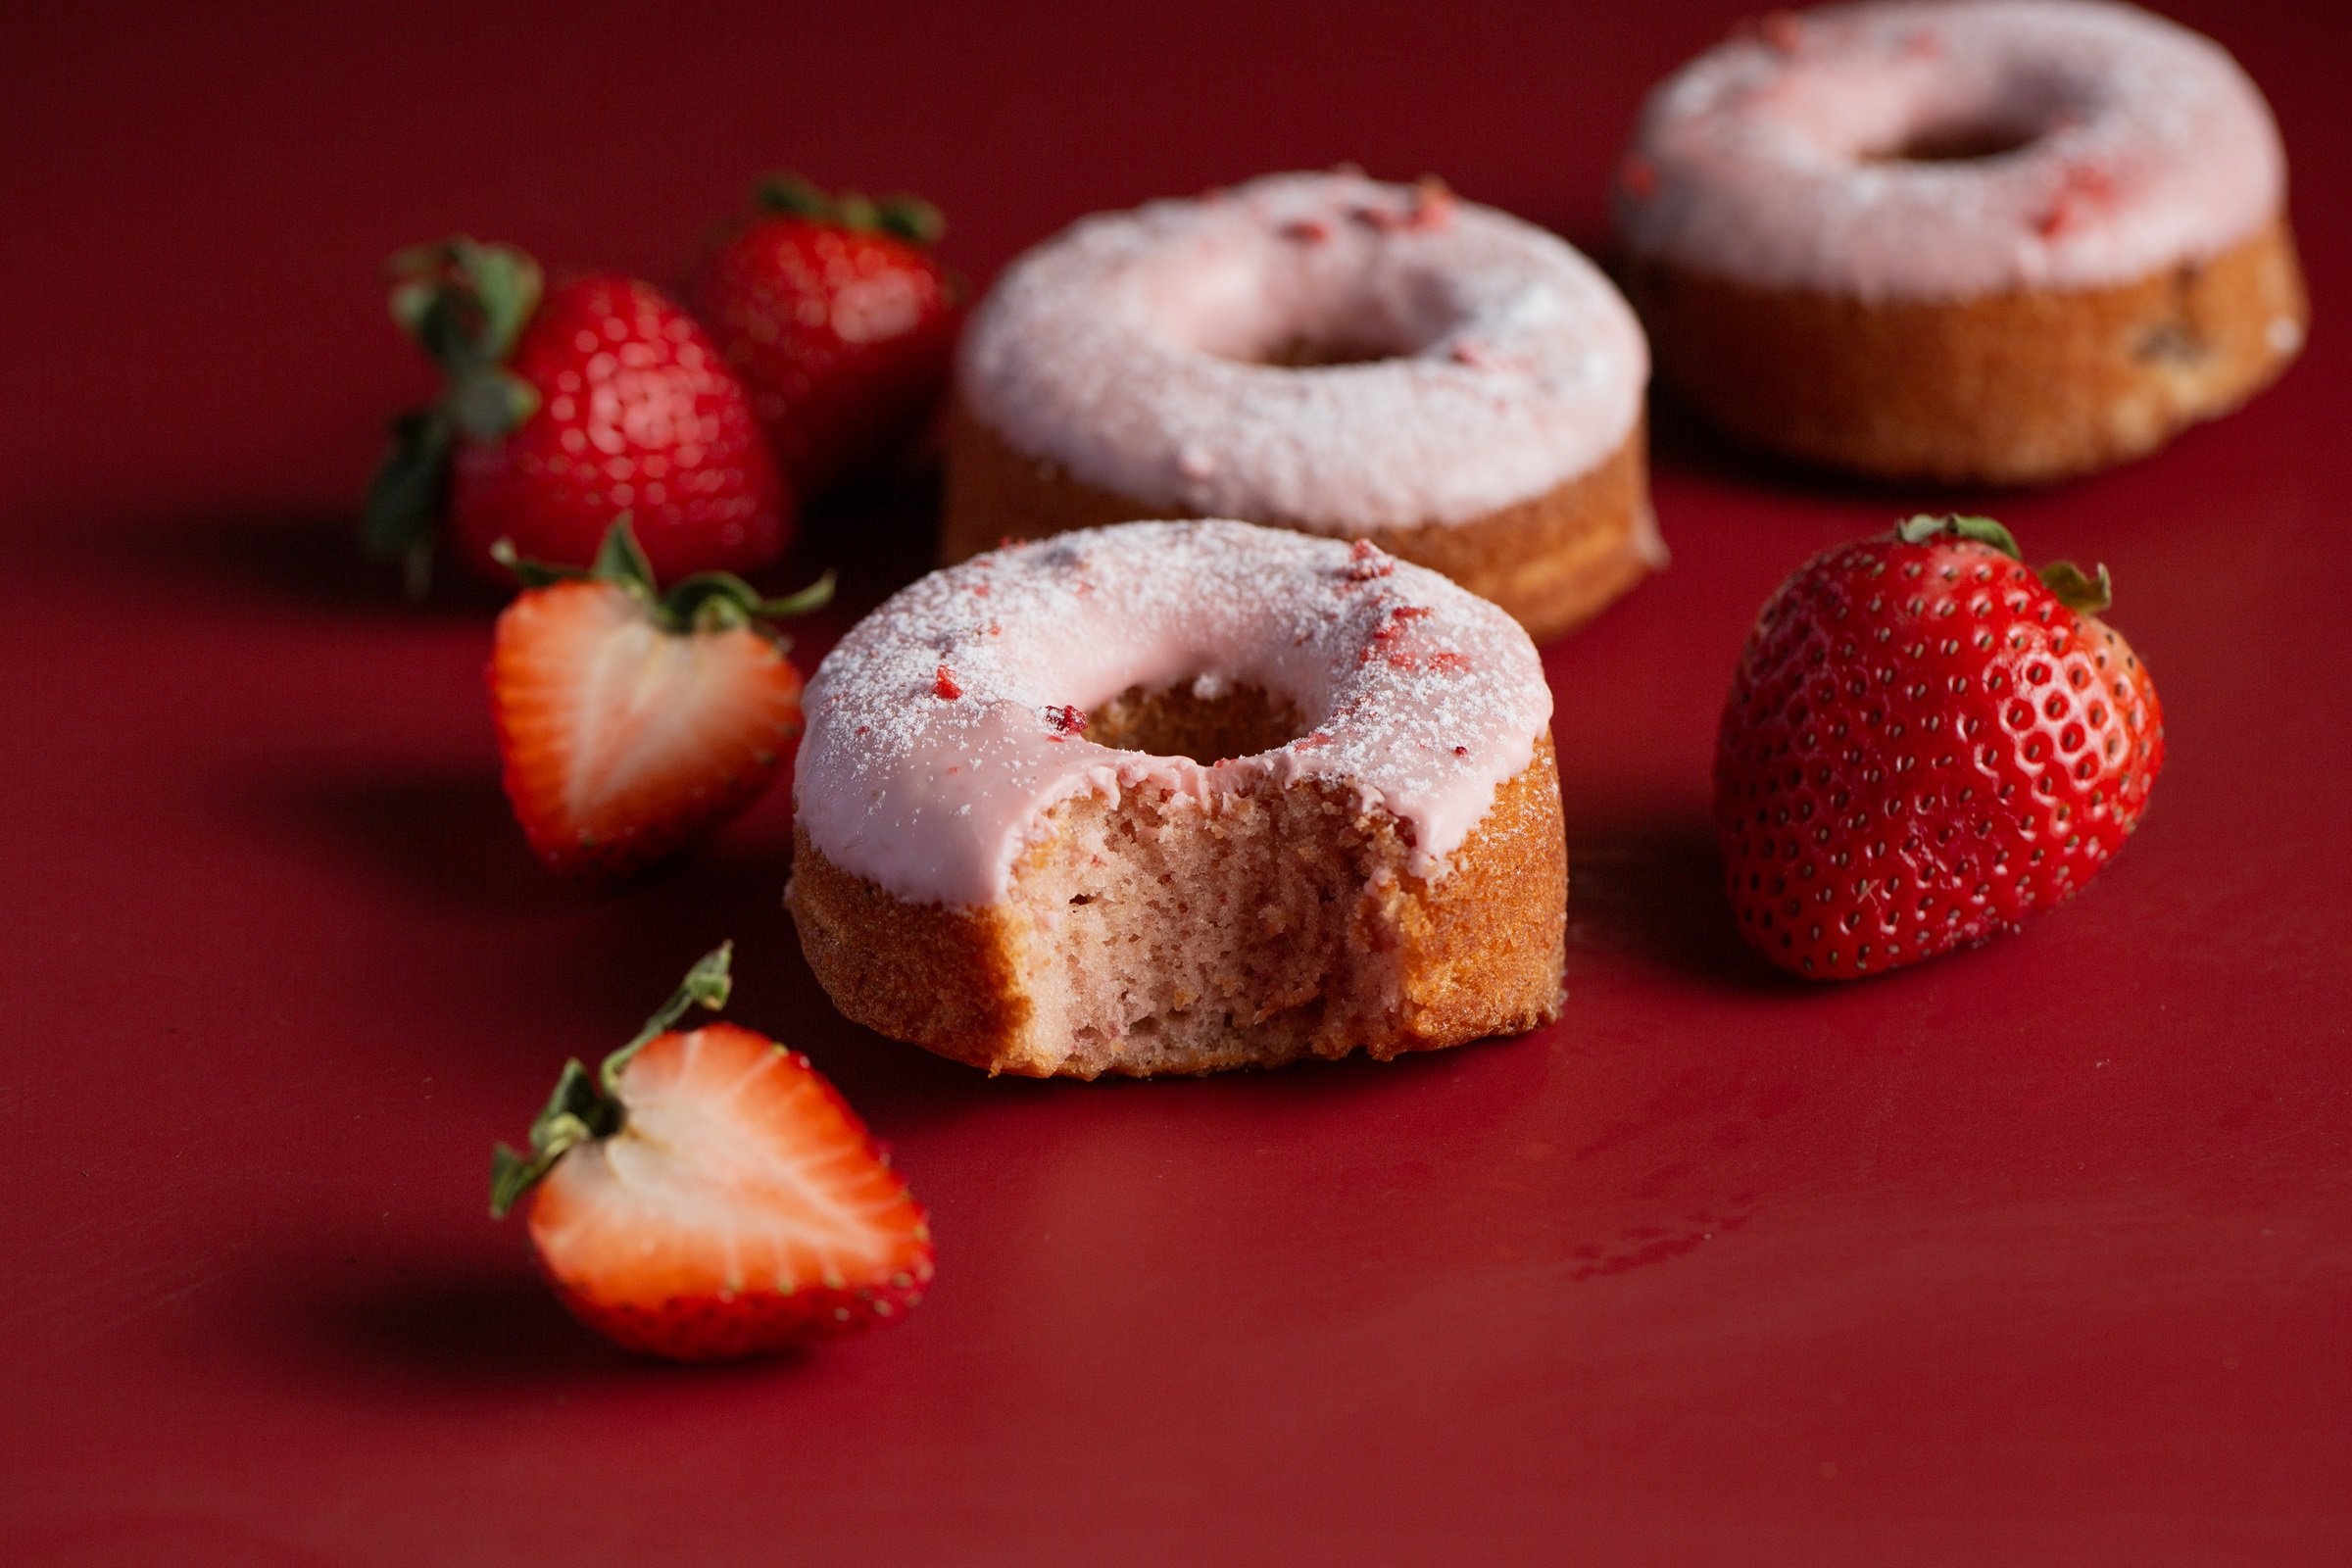 LA ONE 旗下 Bakery、Pizza、歐陸廚房與 Café 攜手推出草莓季限定商品